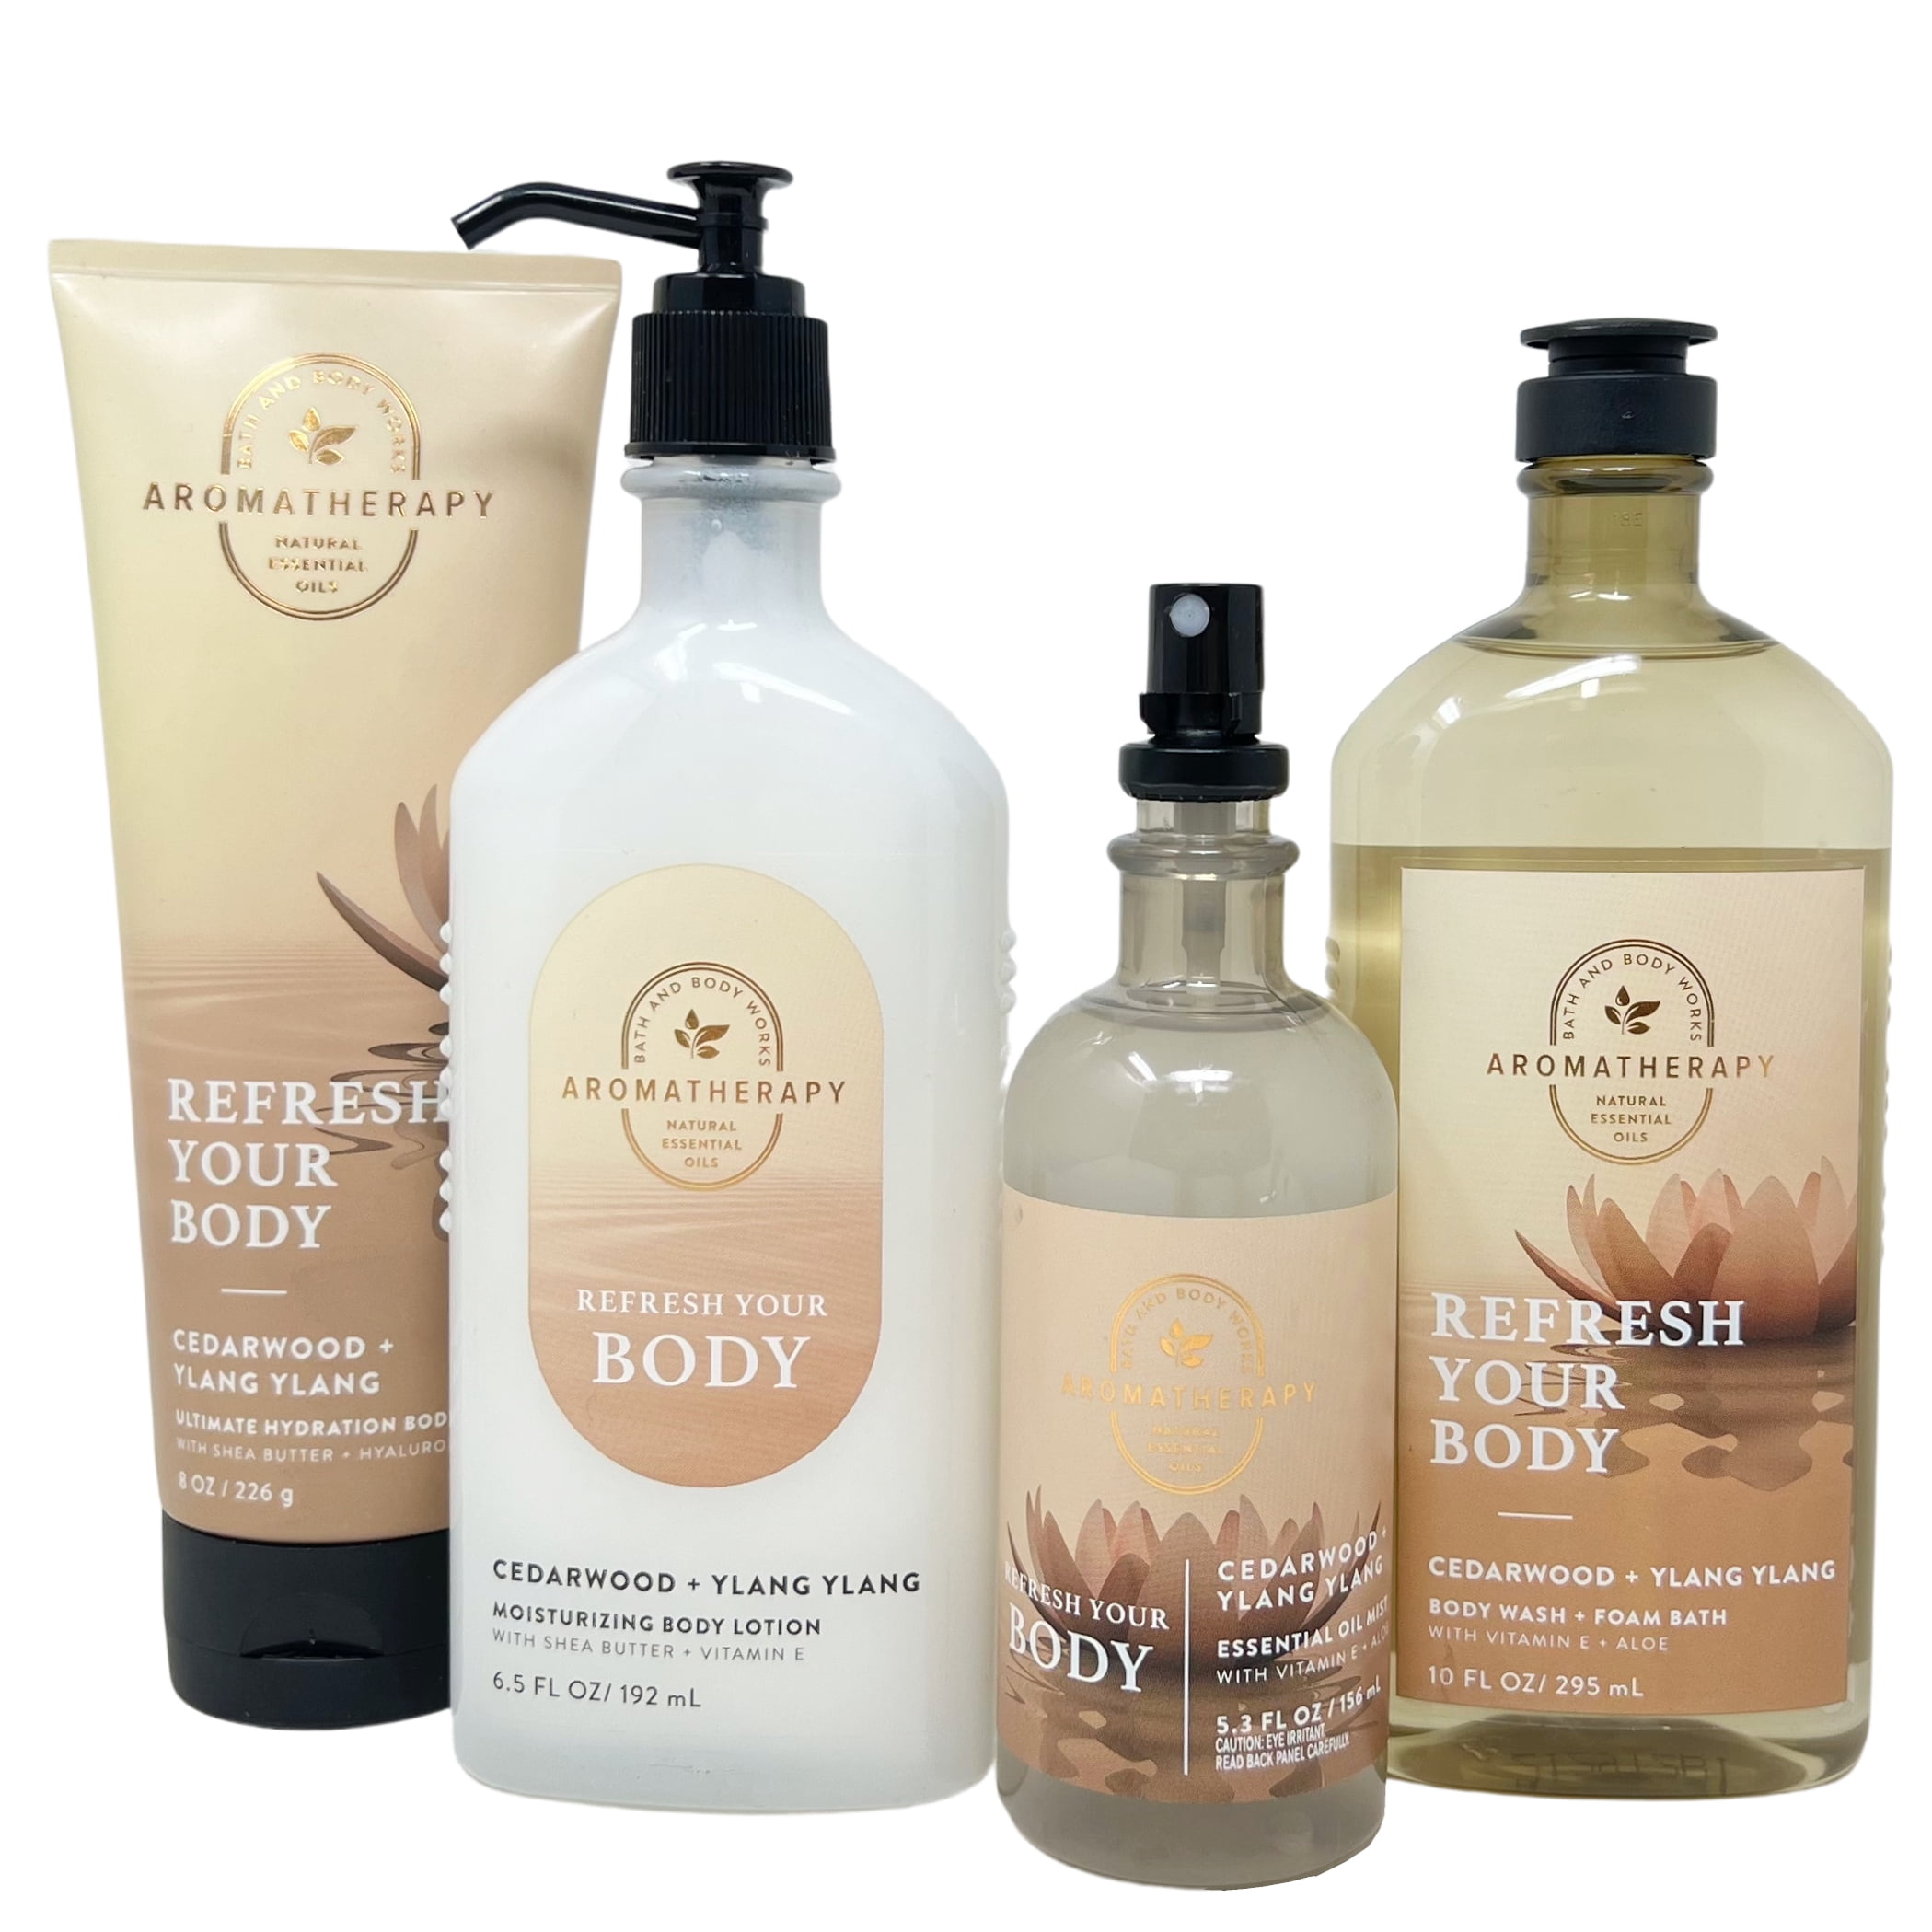 Bath and Body Works Refresh Your Body Aromatherapy Cedarwood + Ylang Ylang Gift Set - Includes Body Lotion, Body Cream, Body + Foam Bath Pillow Mist - Walmart.com